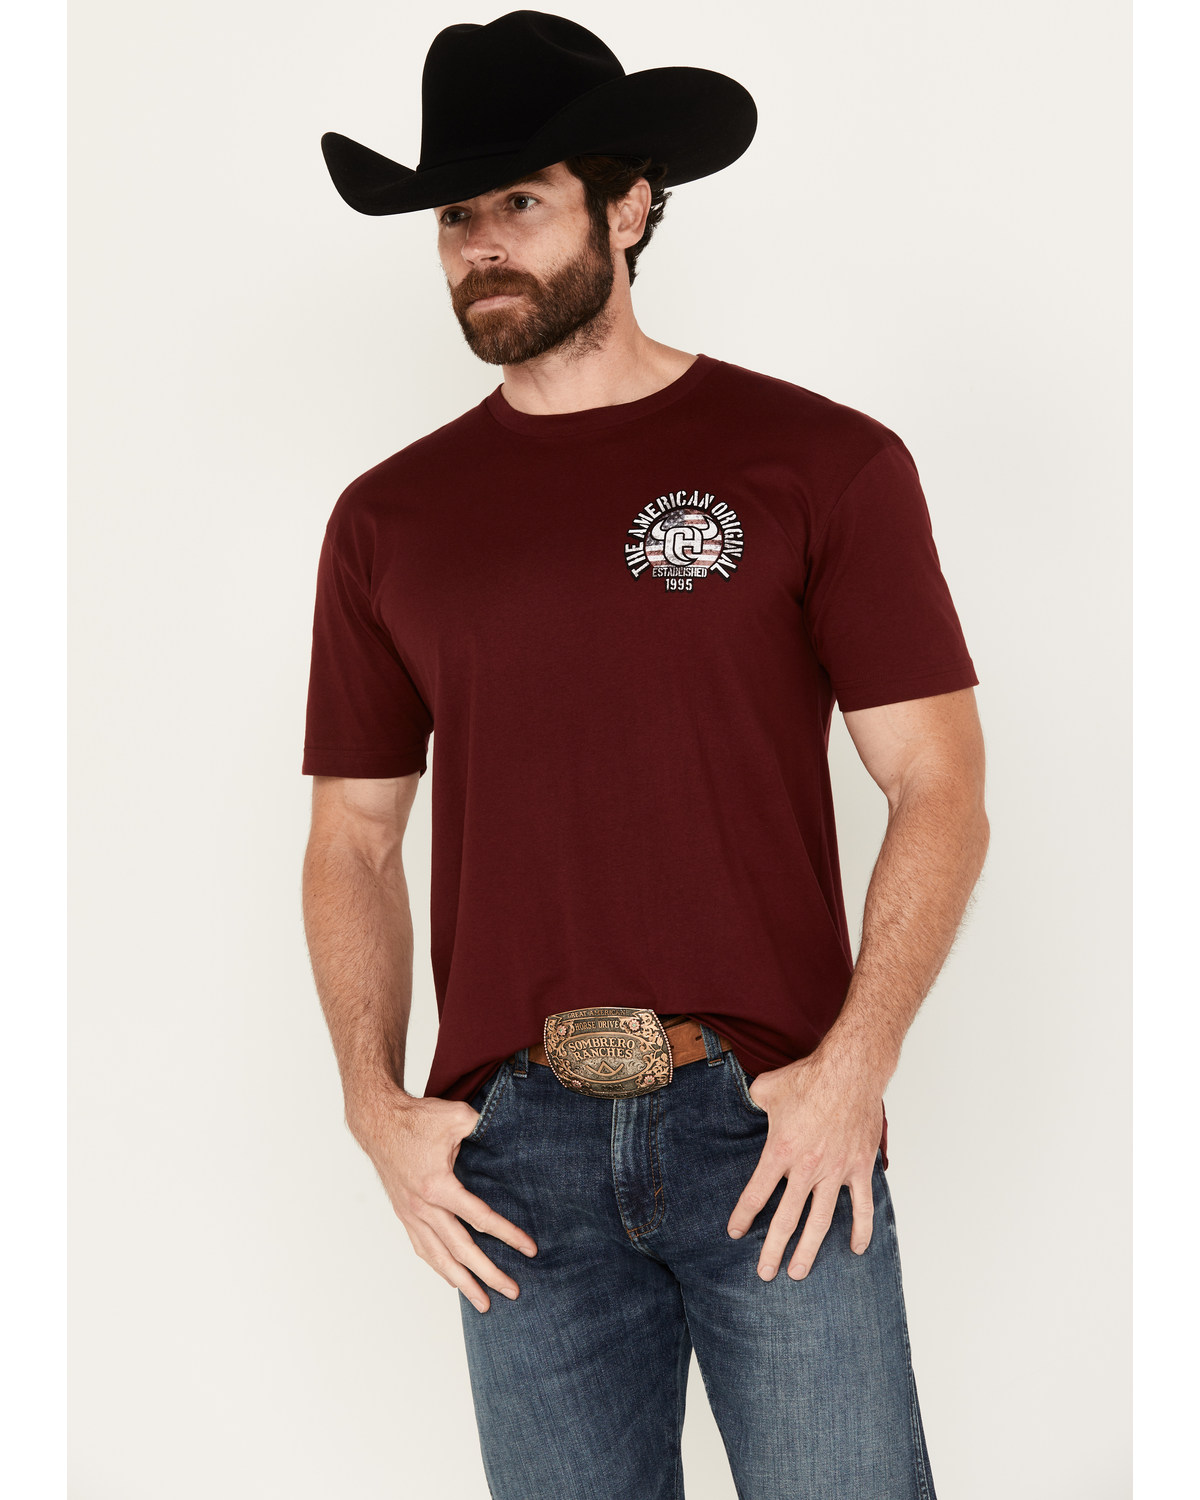 Cowboy Hardware Men's American Original Short Sleeve Graphic T-Shirt